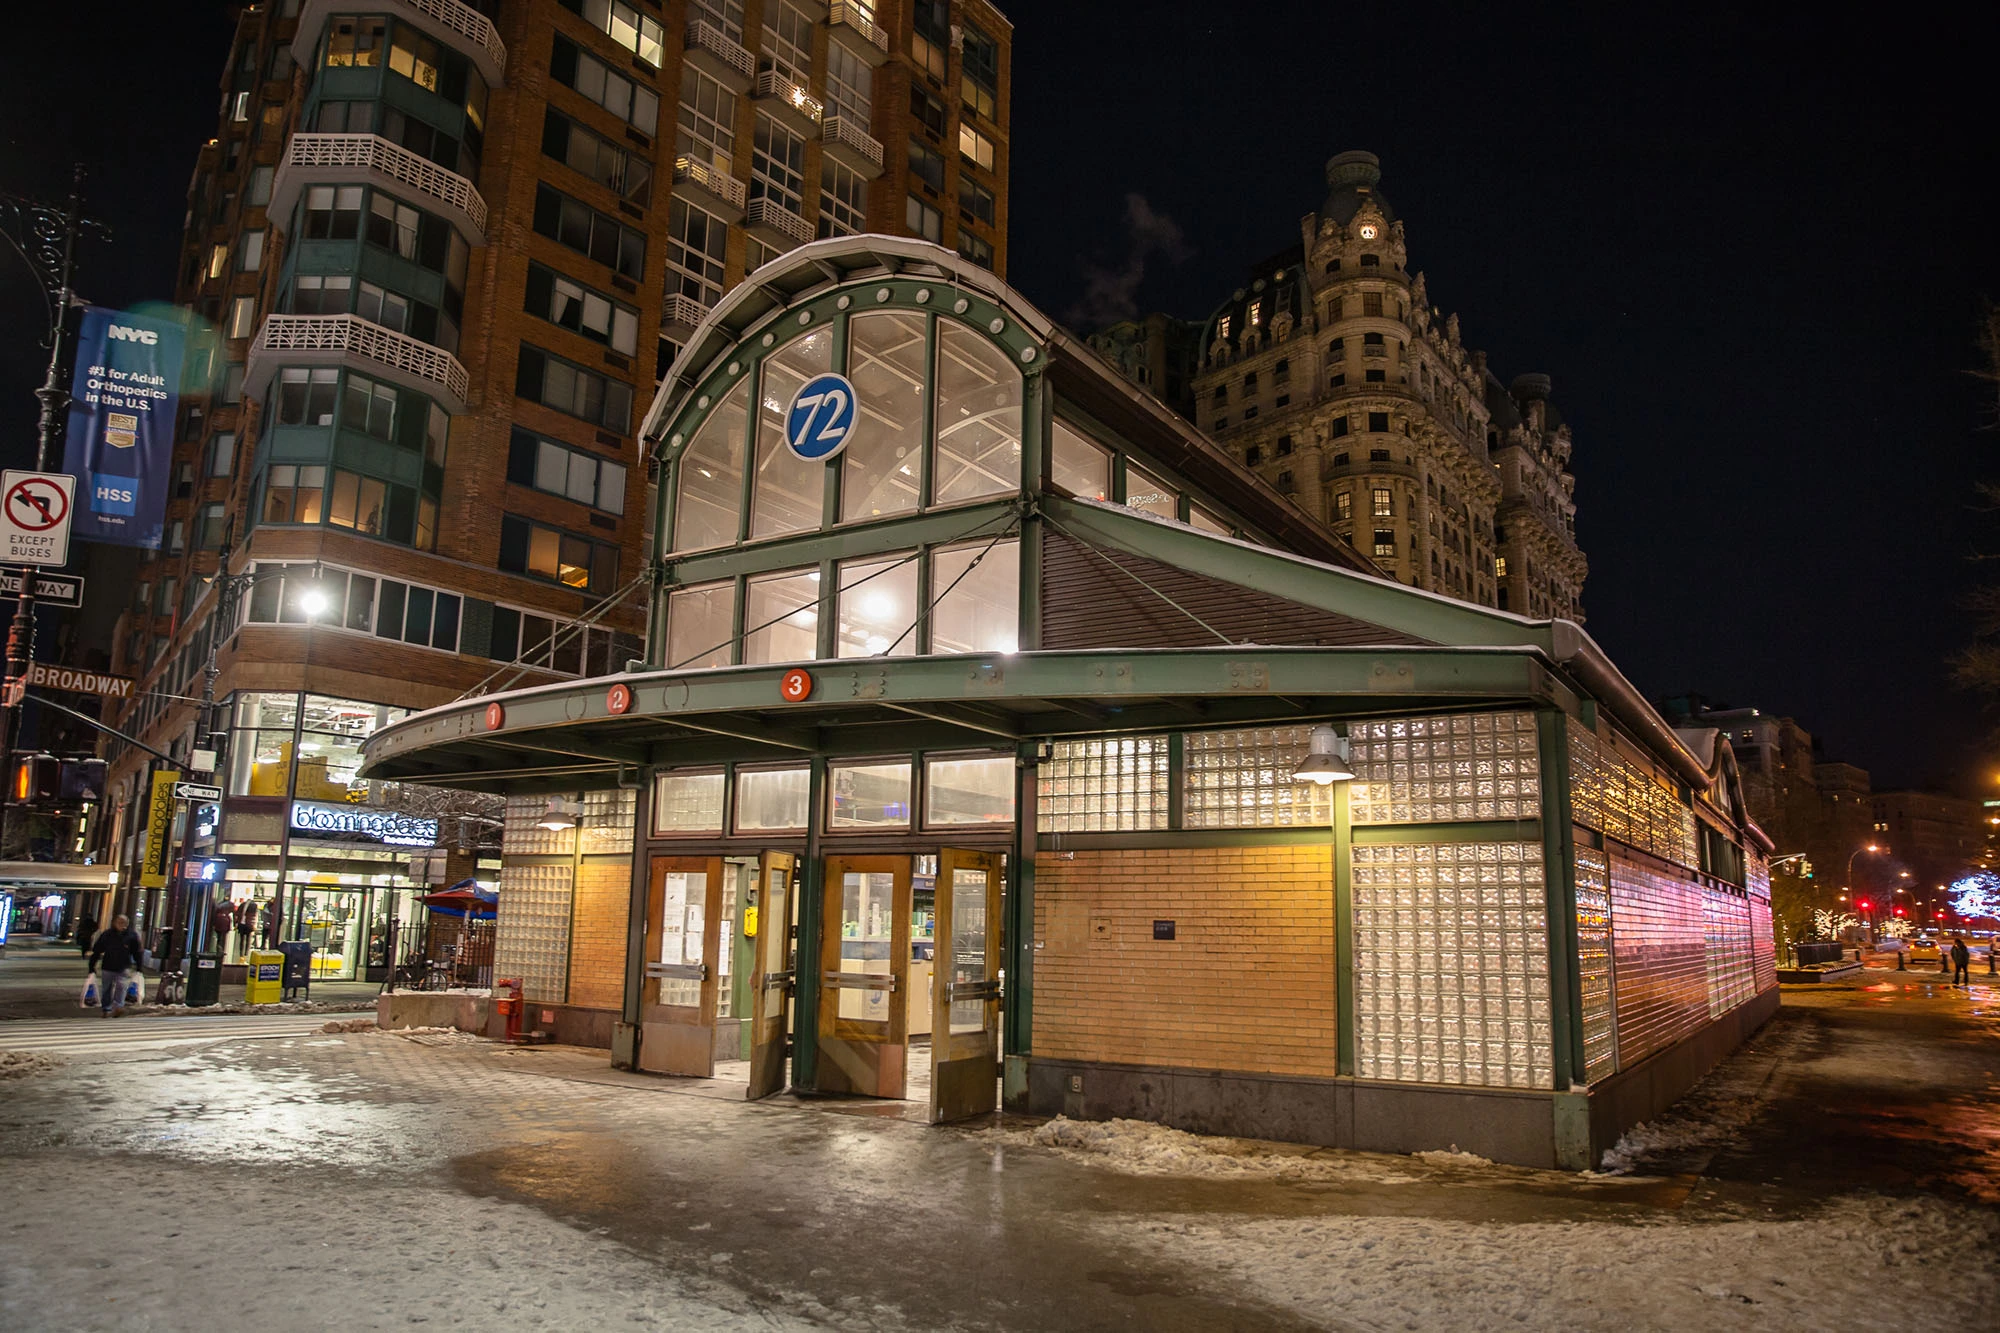 Swedish tourists robbed at NYC subway station on Christmas